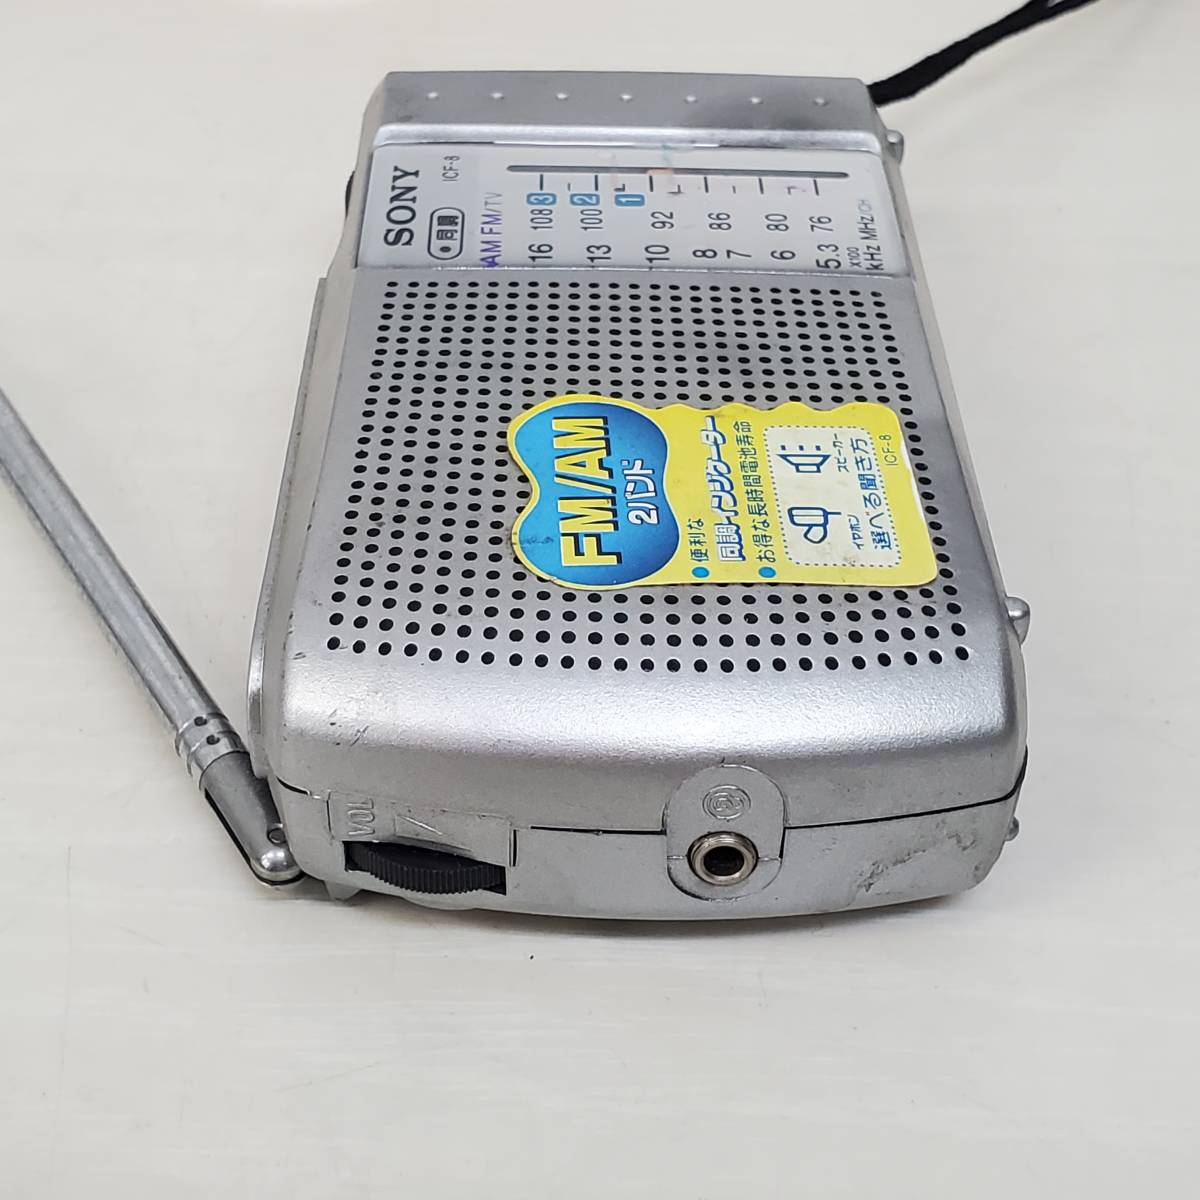 1025-214*SONY radio ICF-8 handy radio pocket radio FM/AM 2 band Sony operation not yet verification Junk simple packing 